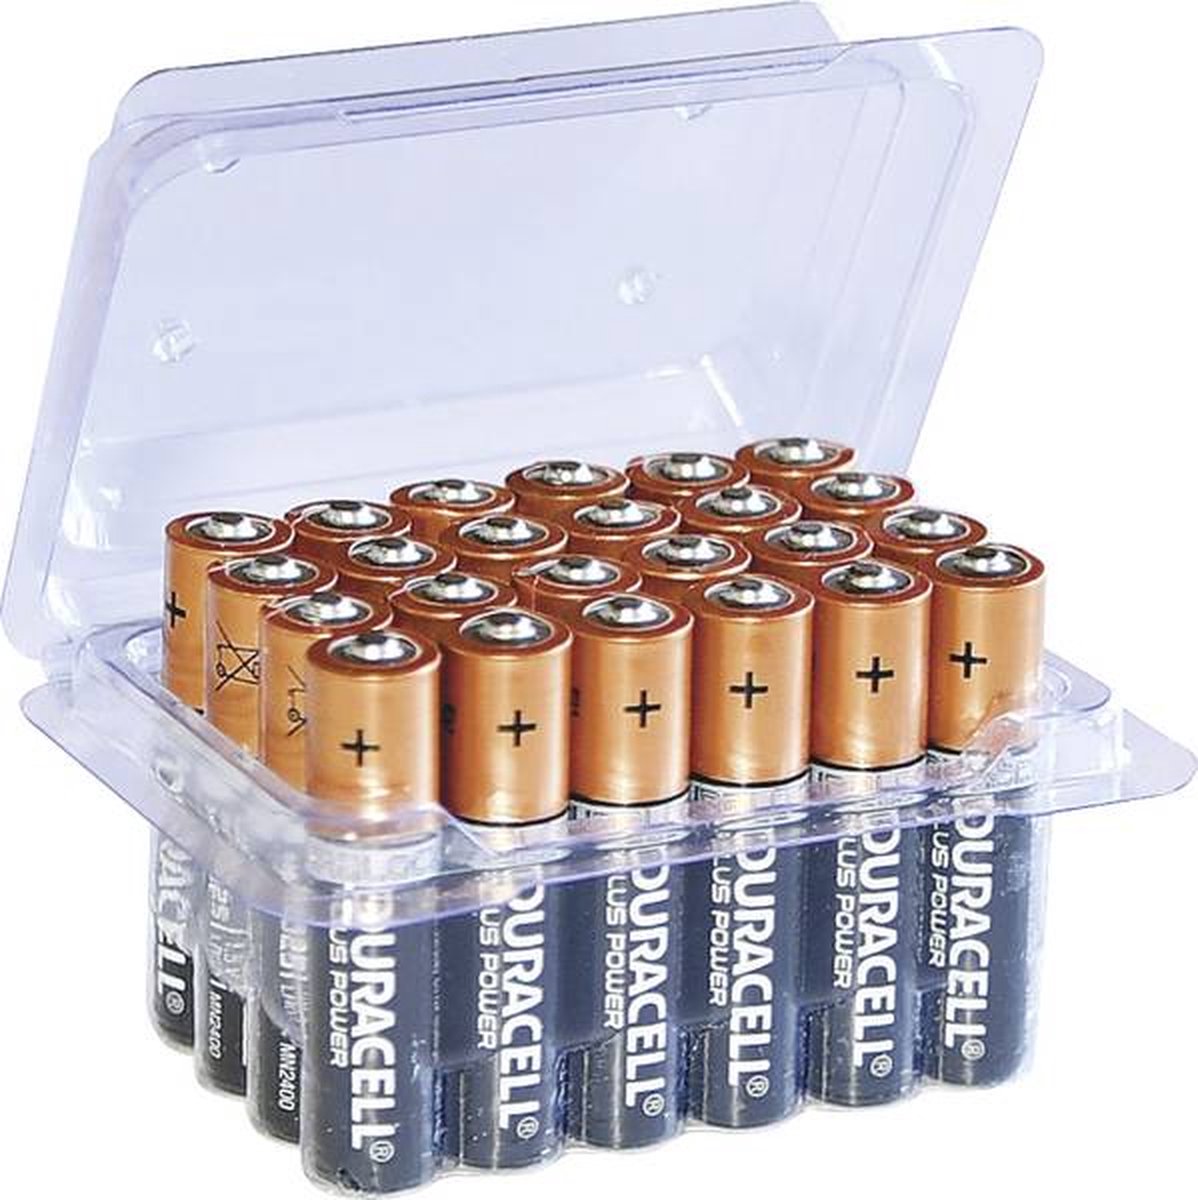 zwaan ethisch Preek Duracell 24 AAA batterijen in box | bol.com